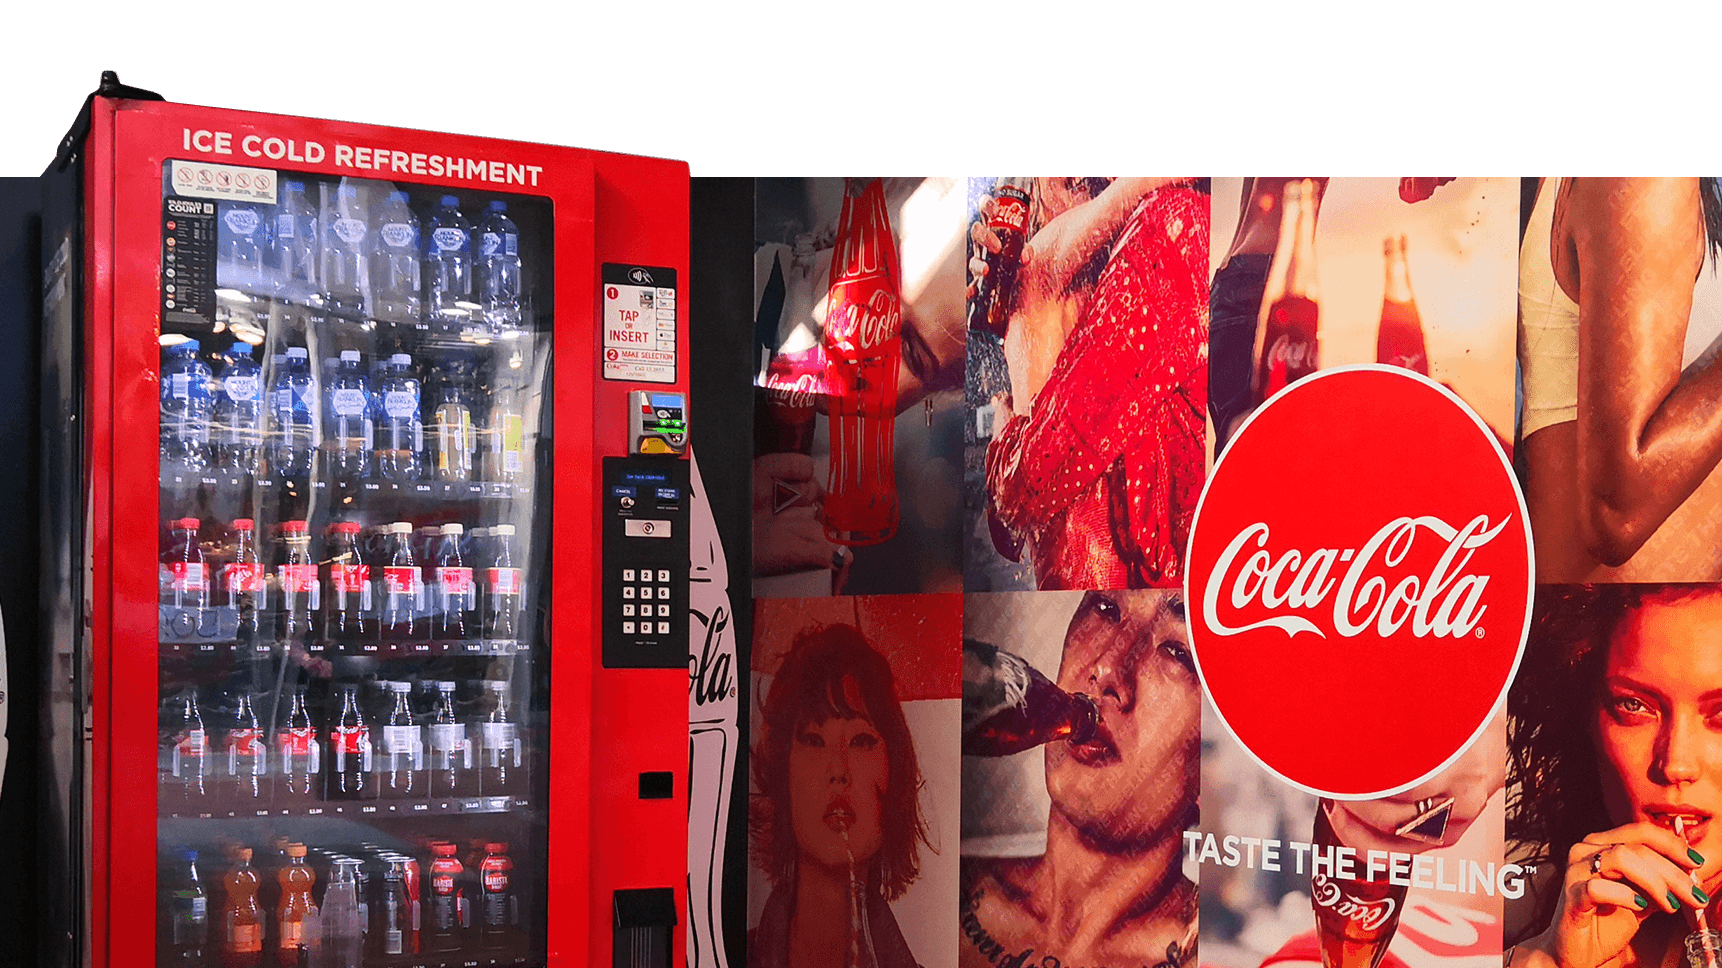 Coca-cola's smart vending machine captures user data to help the company make better mixes. Source: Shutterstock